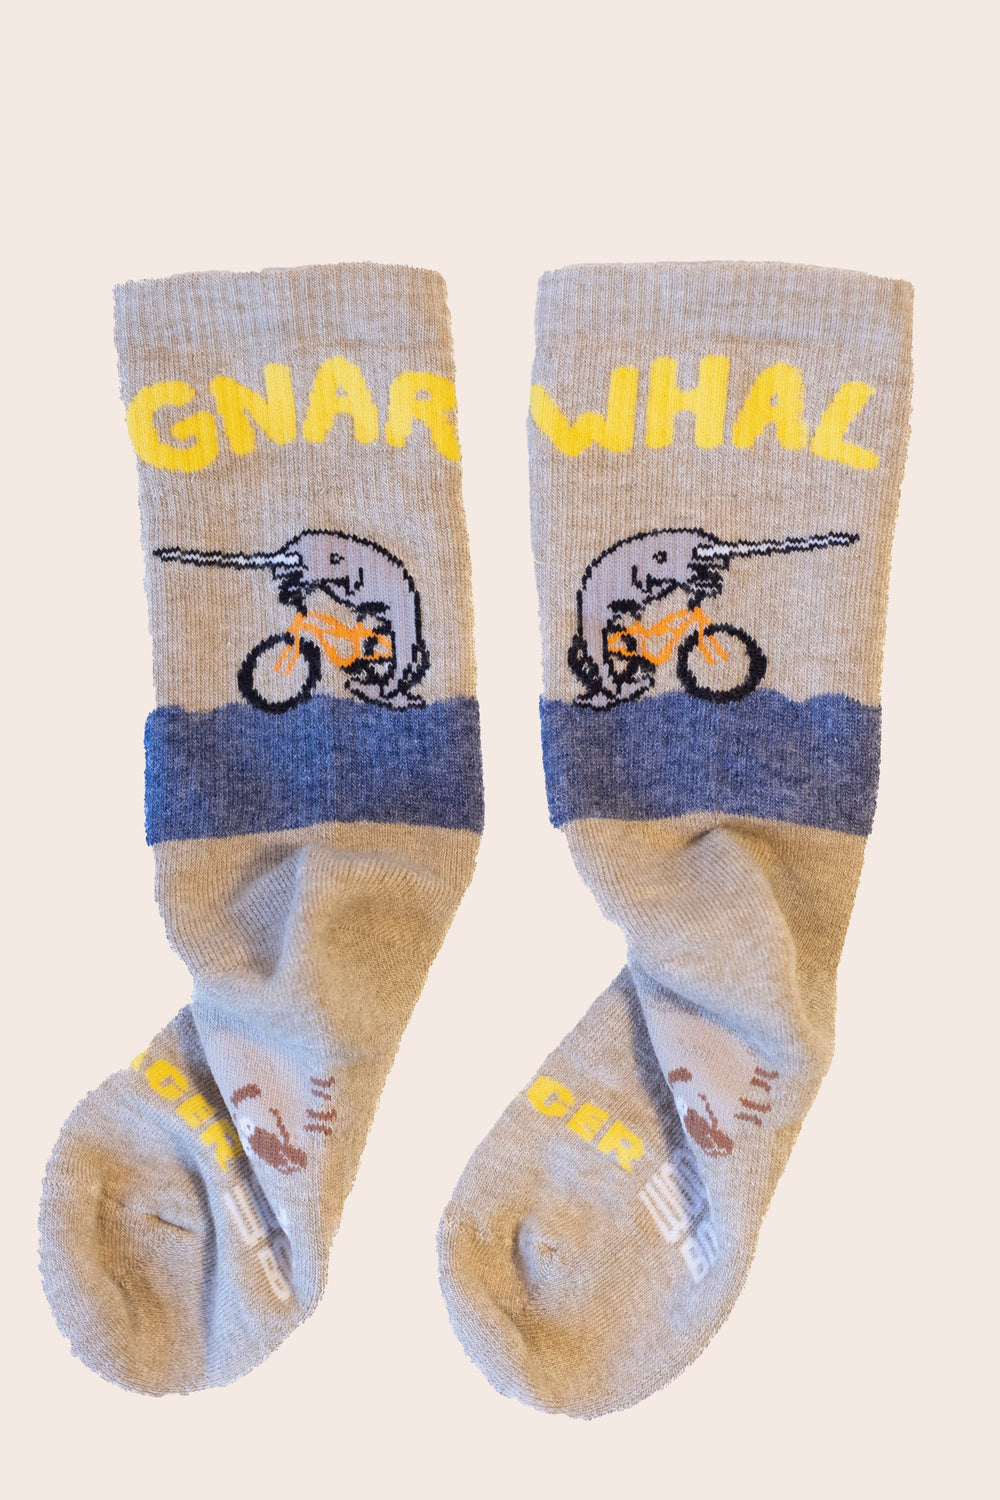 Gnarwhal Socks